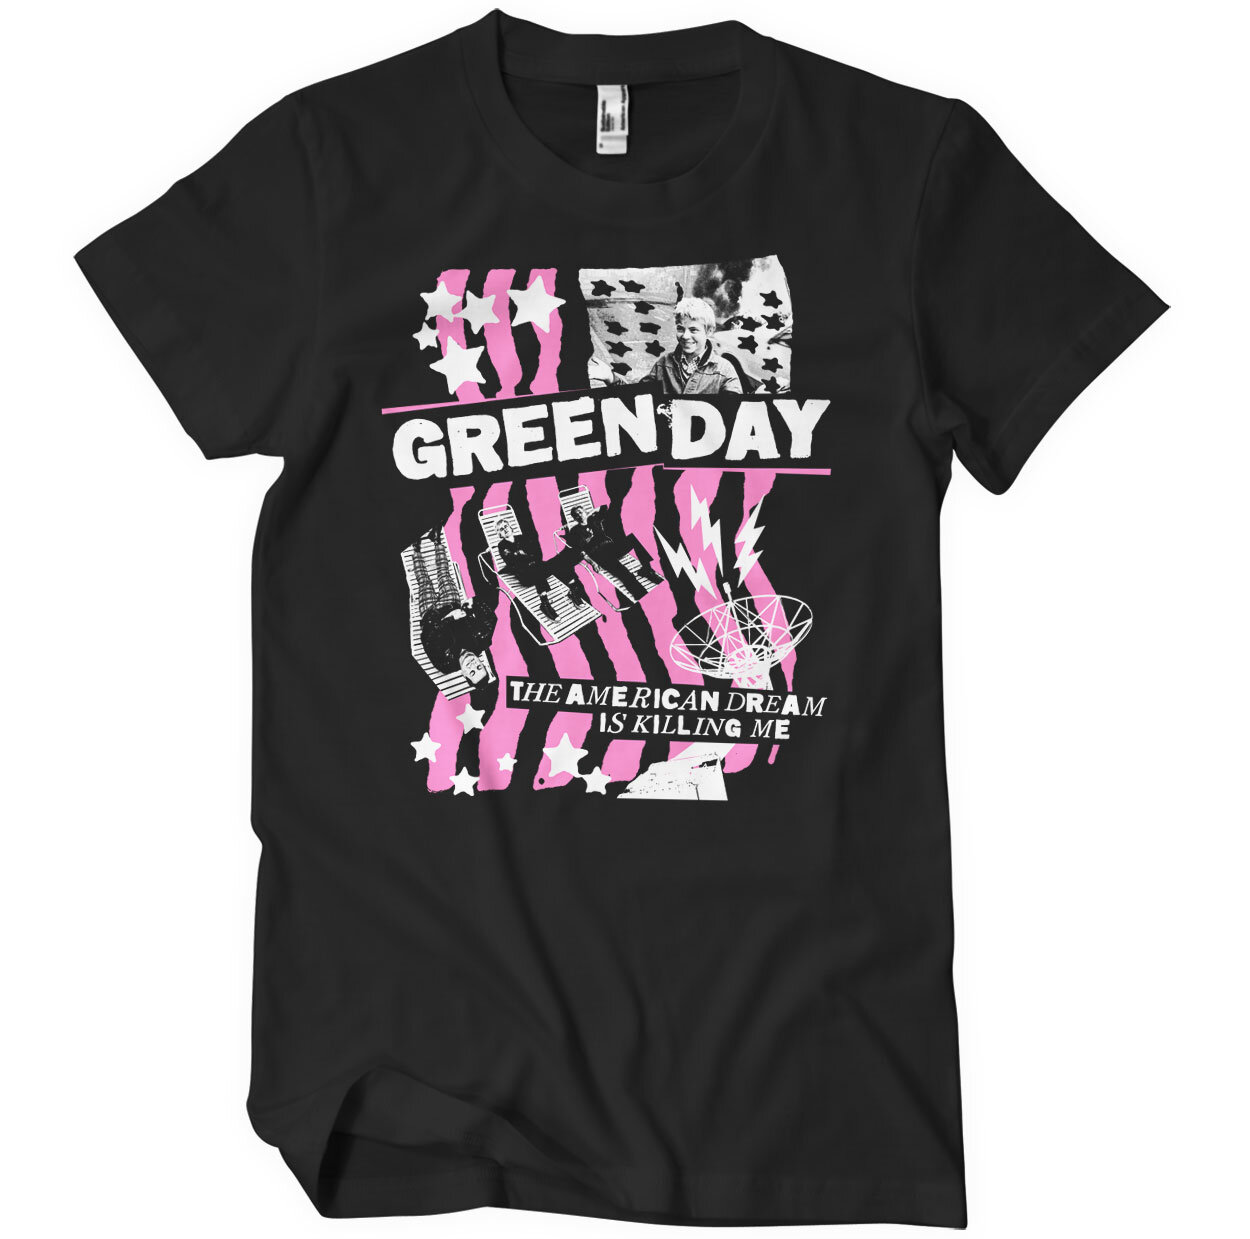 Green Day - American Dream T-Shirt